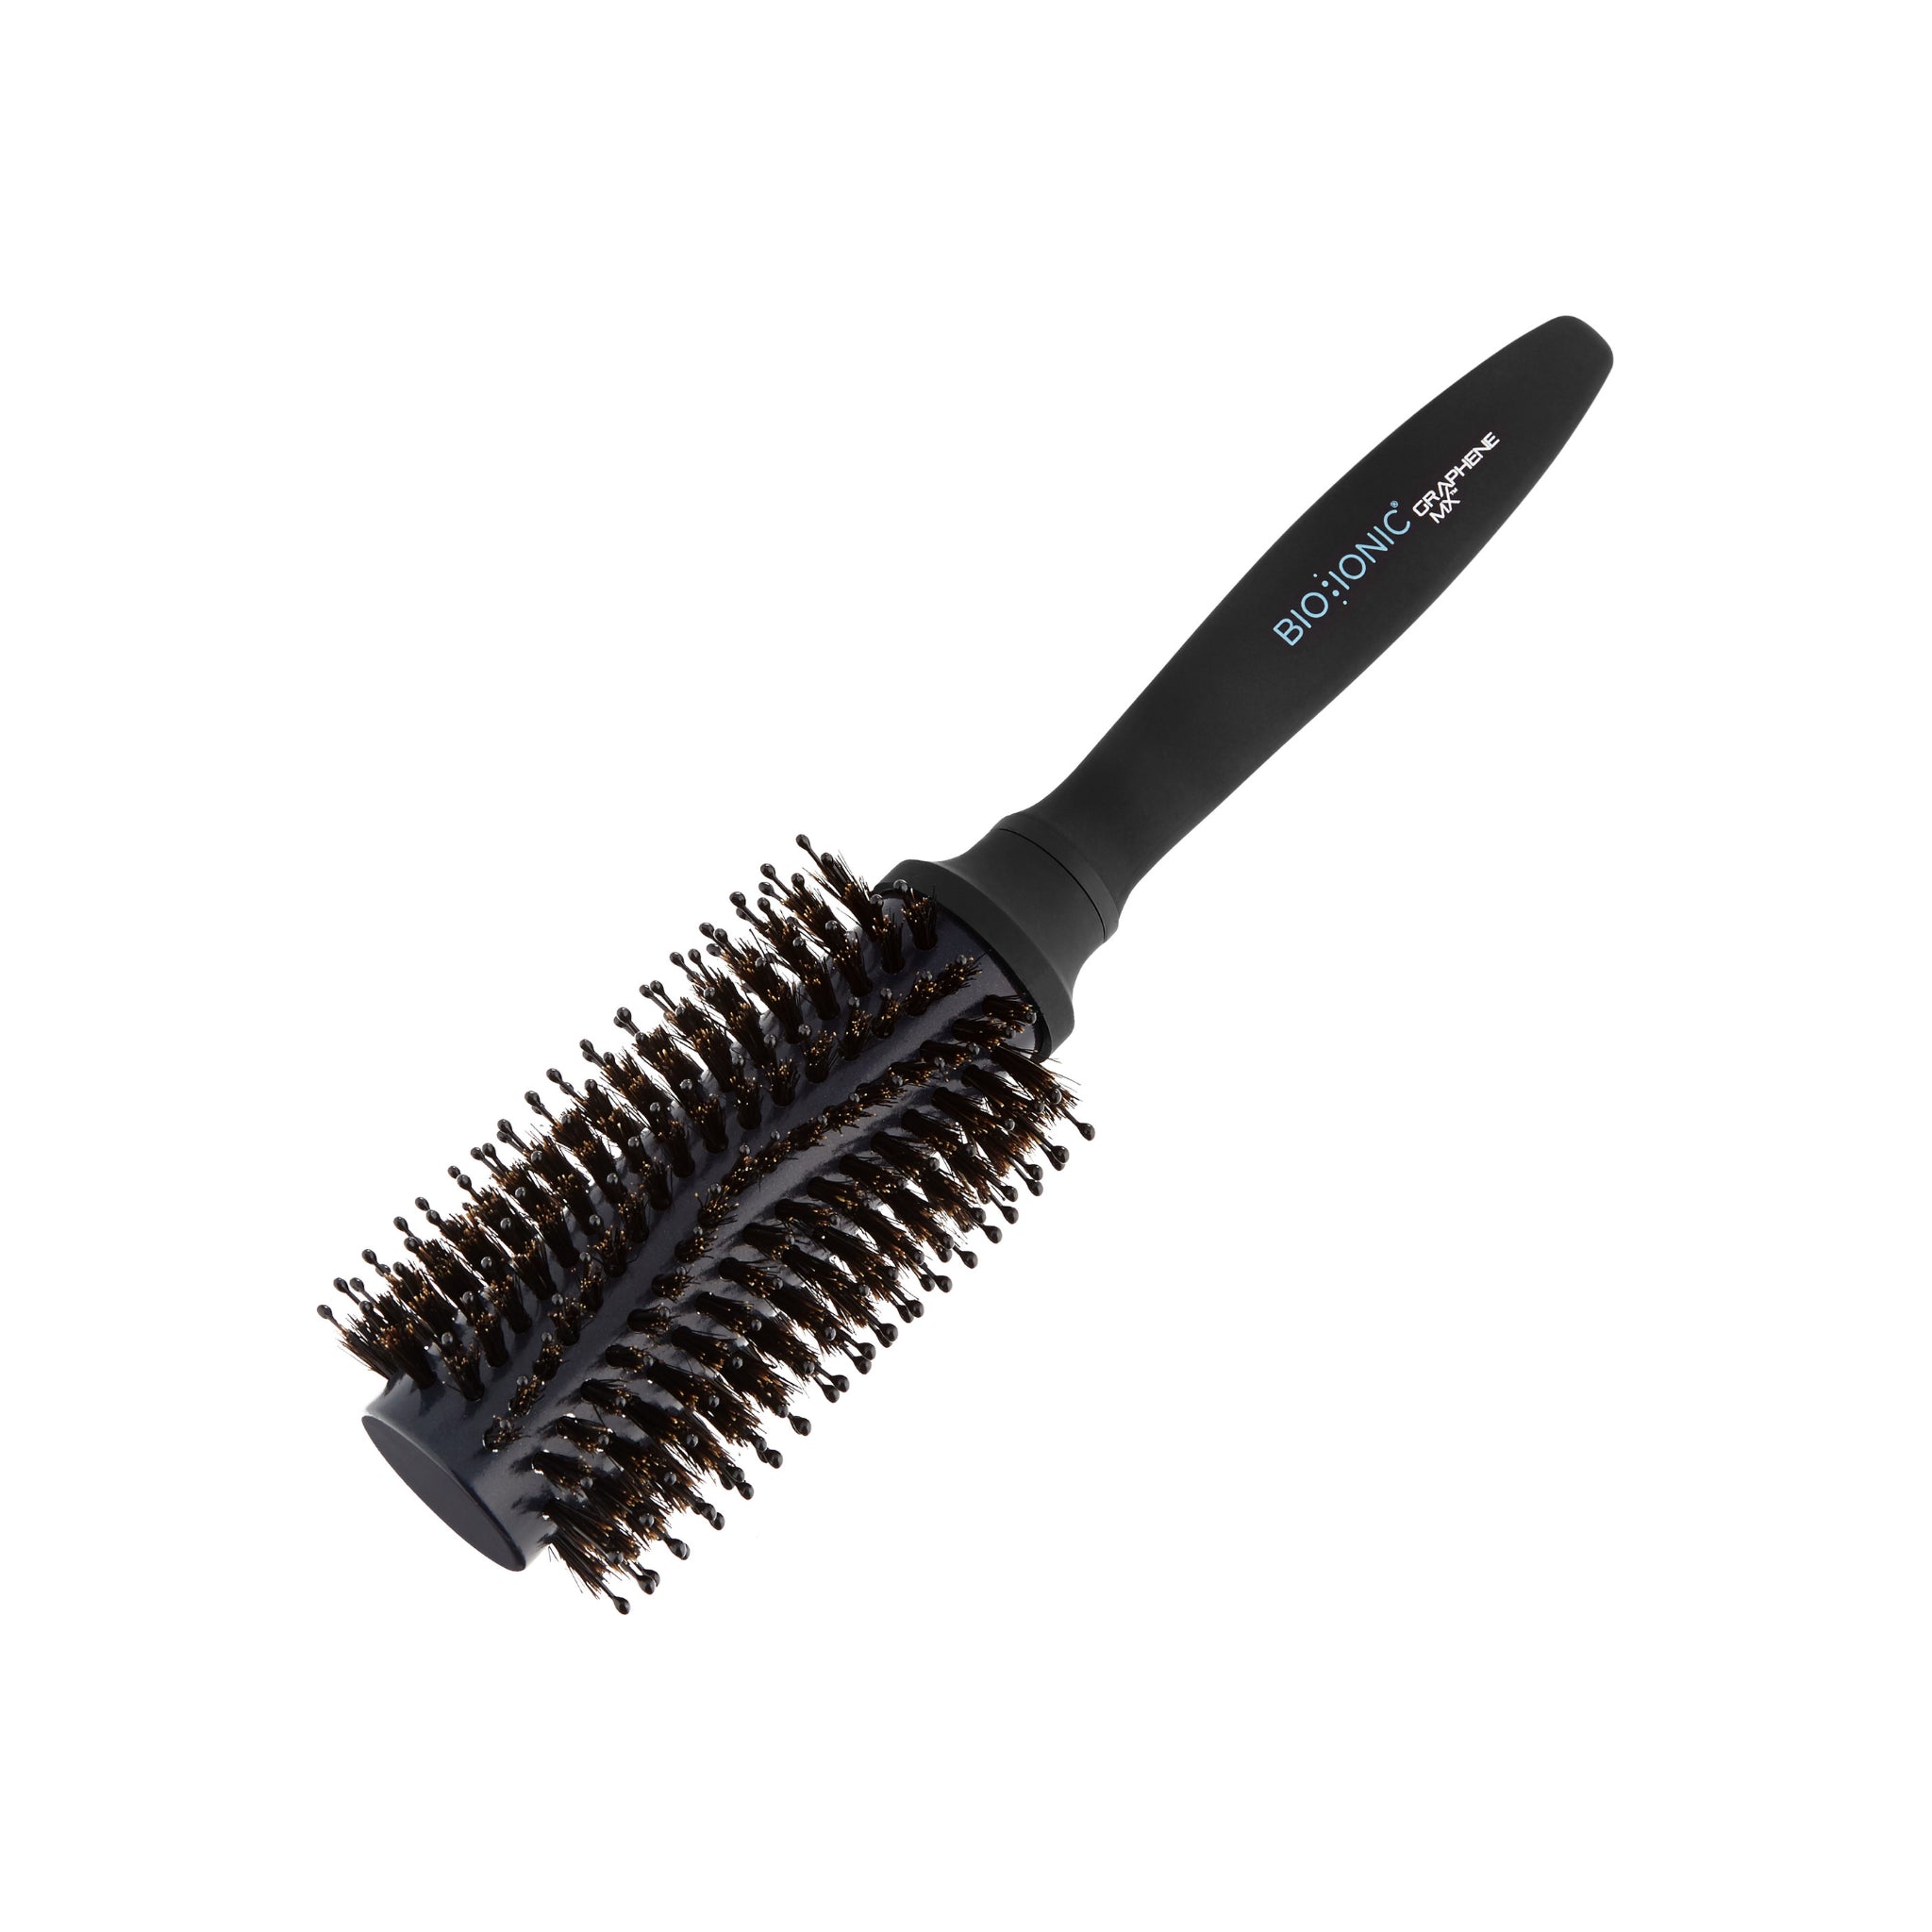 Graphene MX - Boar Styling Brush (Large - 31mm)